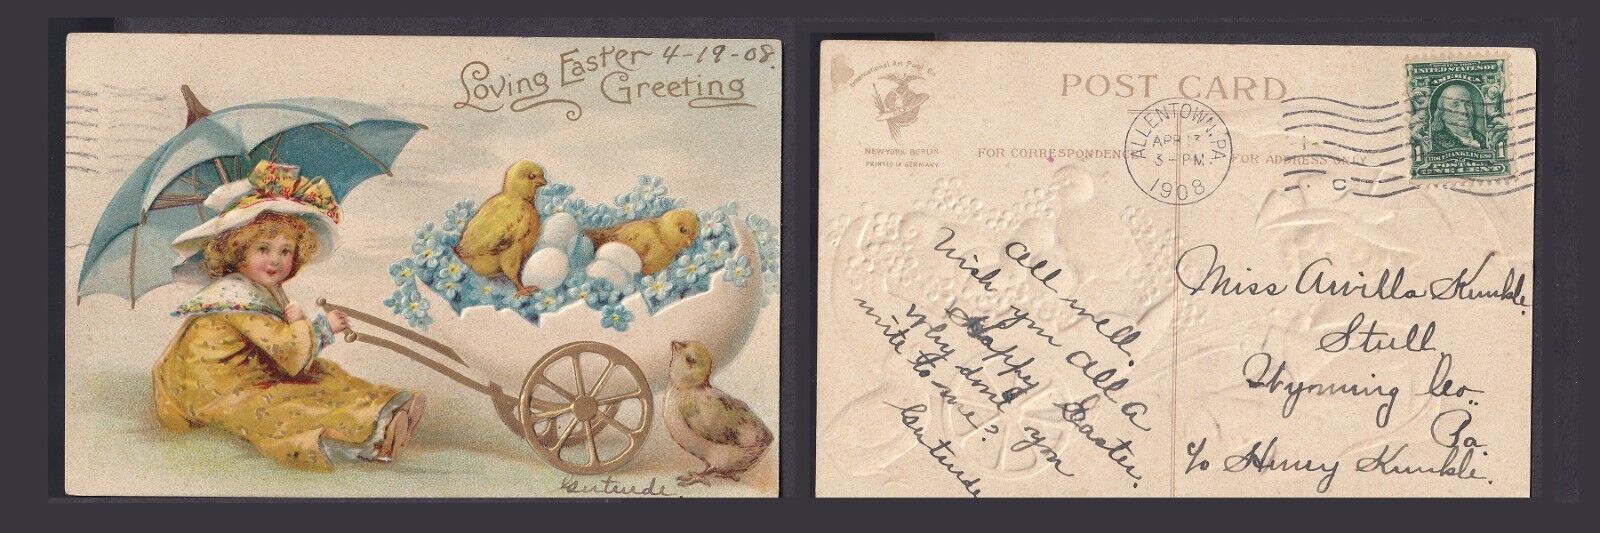 Loving Easter Greeting Girl Blue Umbrella Chicks Eggs 1908 Vintage Used Postcard